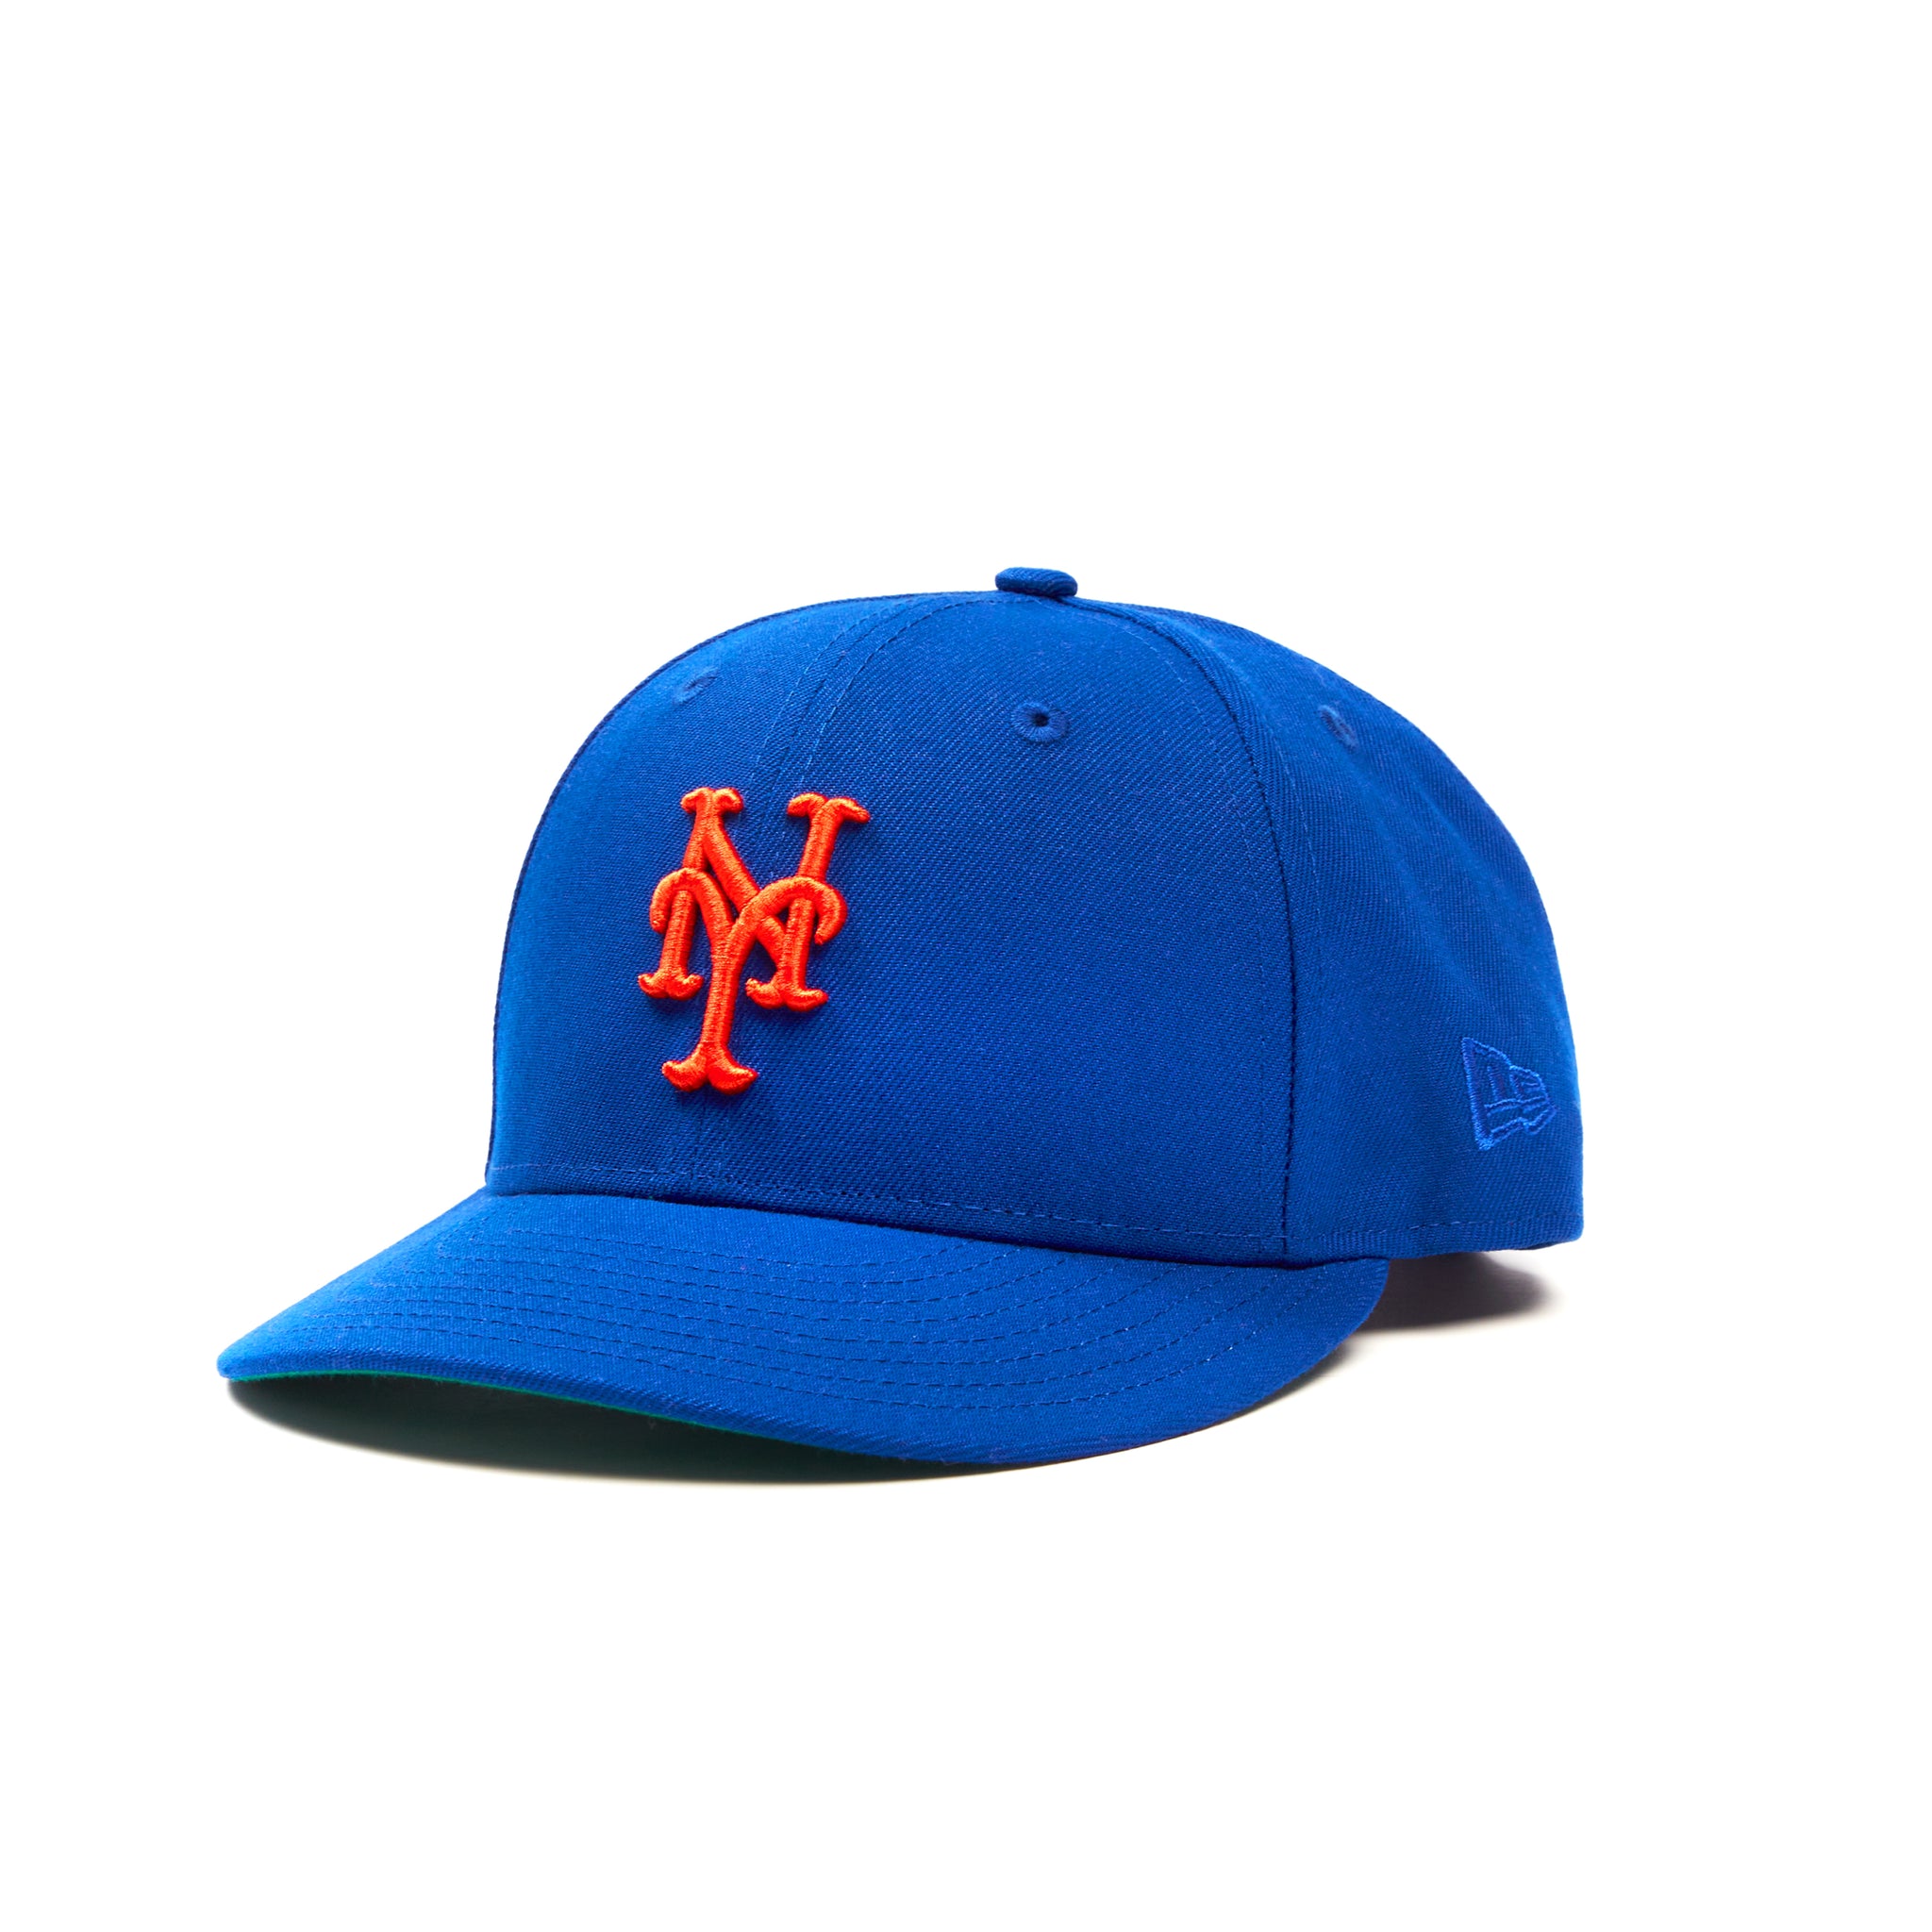 ALLTIMERS - New Era Mets Hat "Blue / Gold"